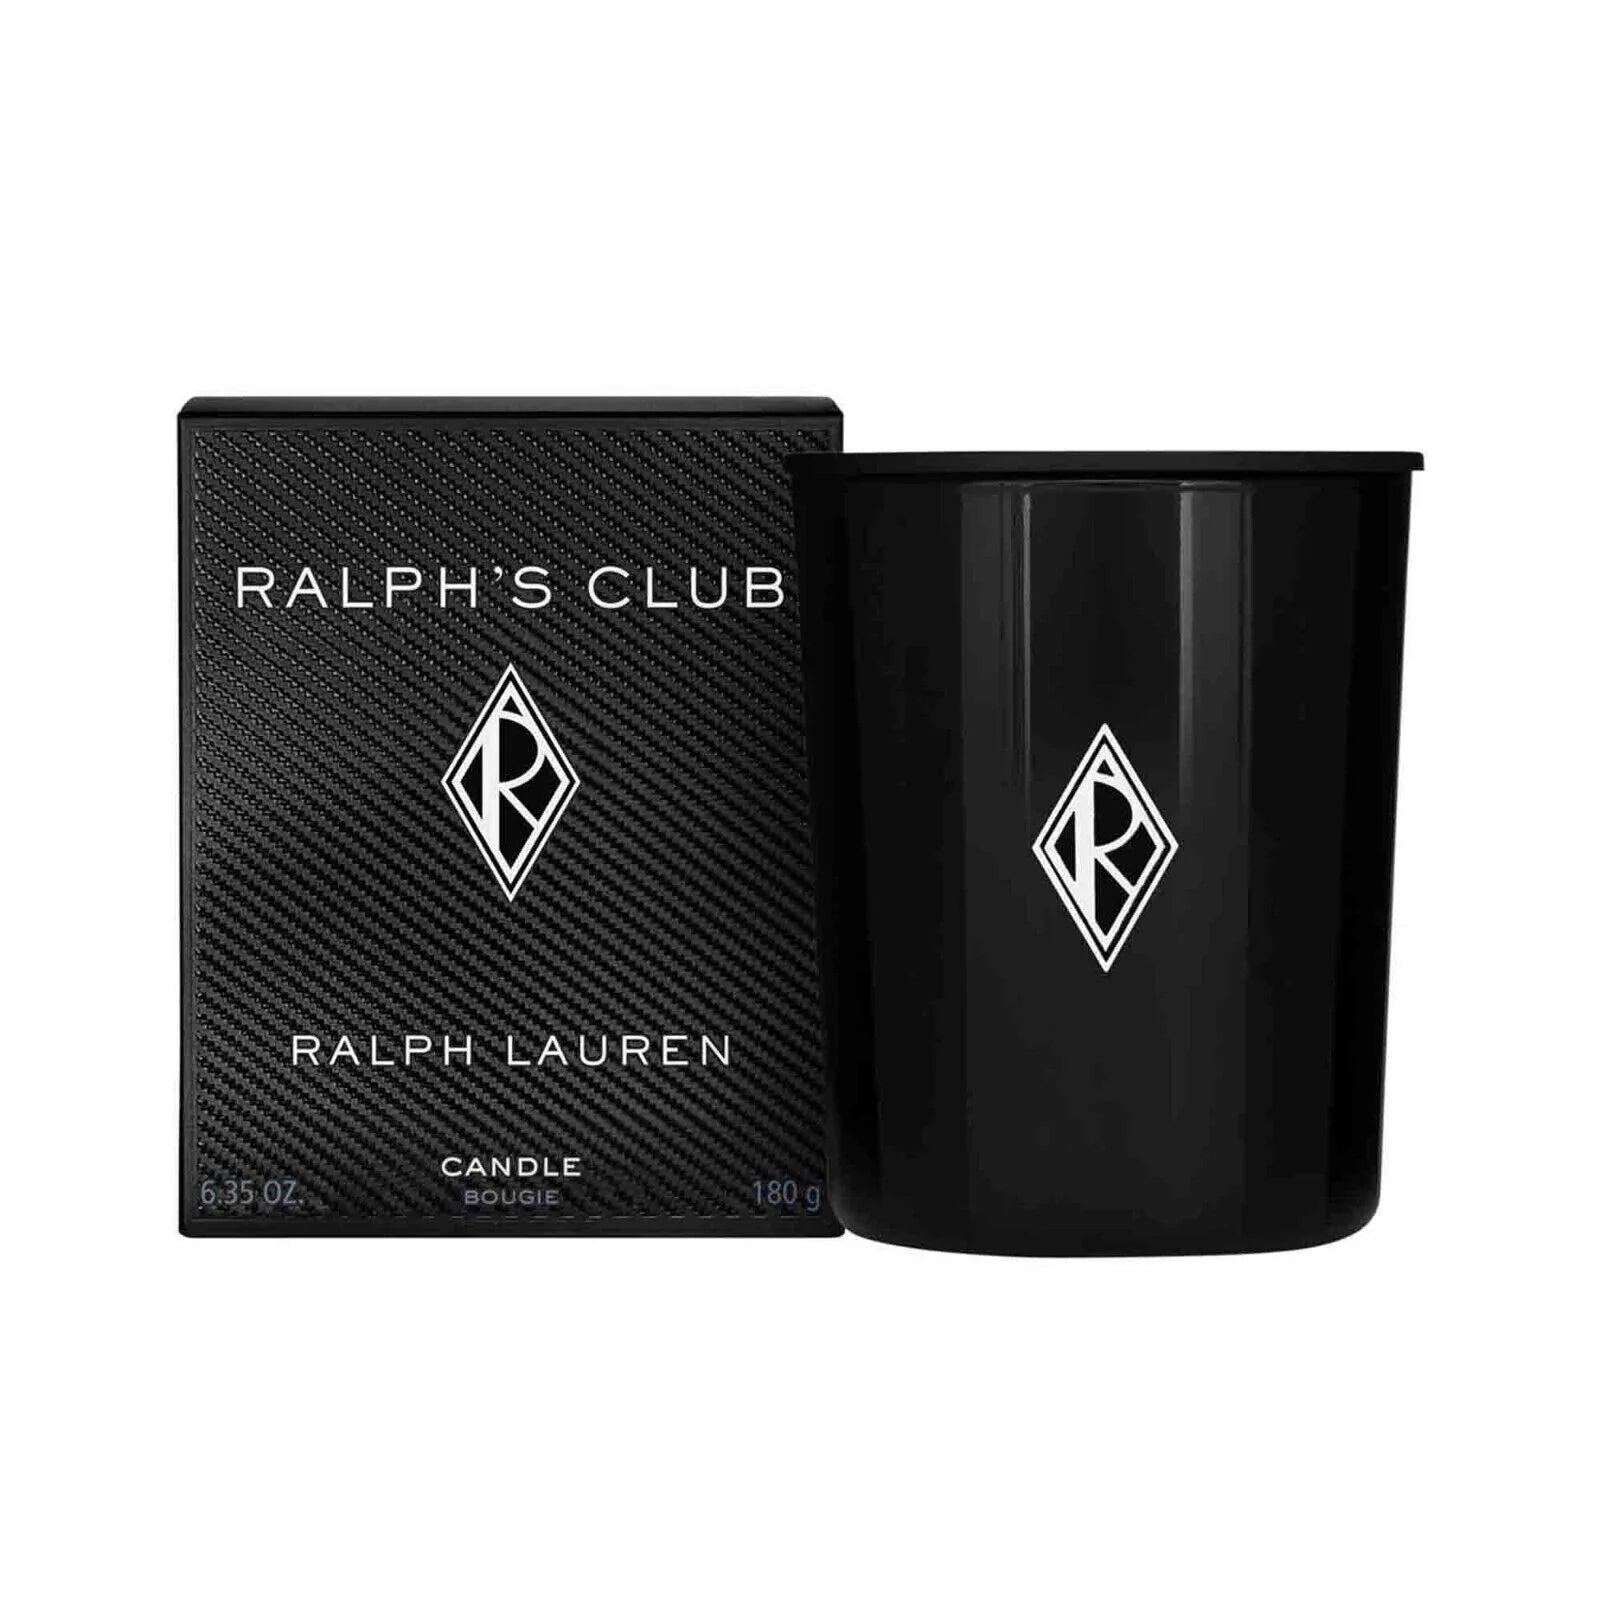 Ralph Lauren Ralph's Club Scented Candle | My Perfume Shop Australia